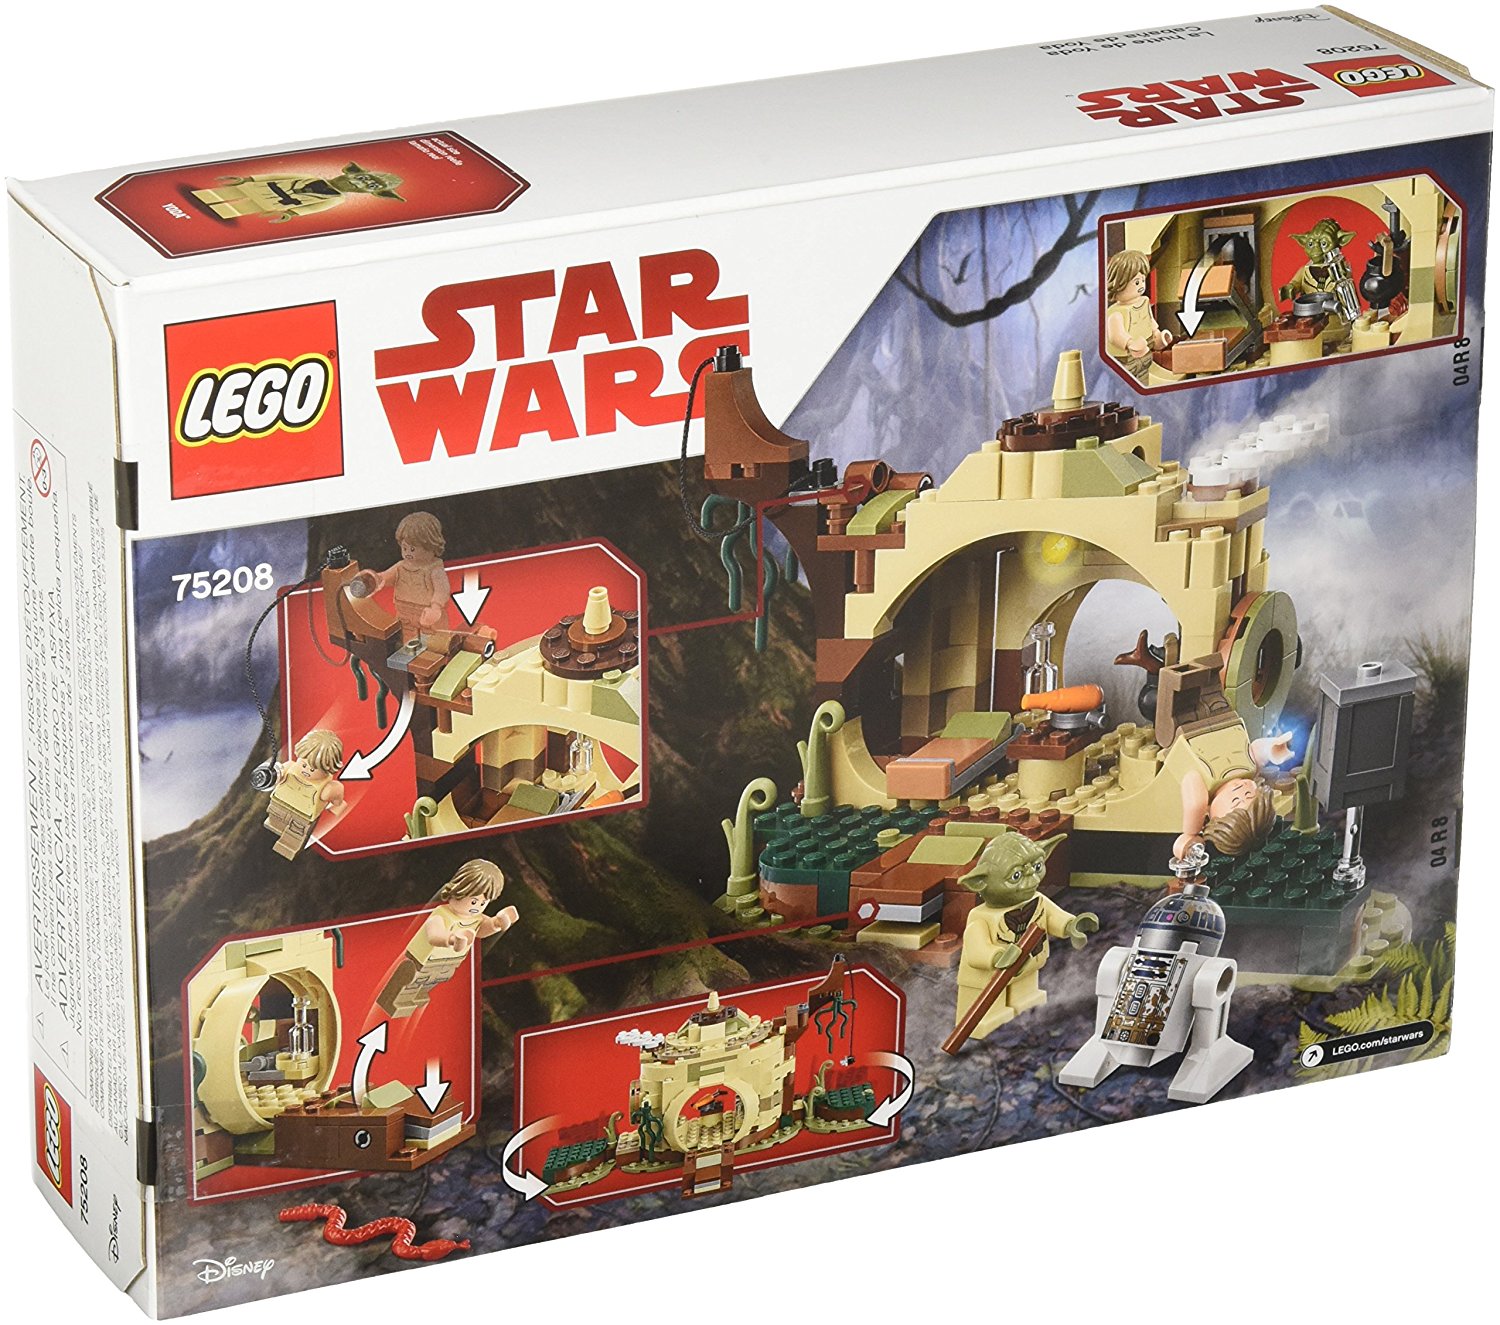 TLJ (TESB) Yoda's Hut Lego Set 2